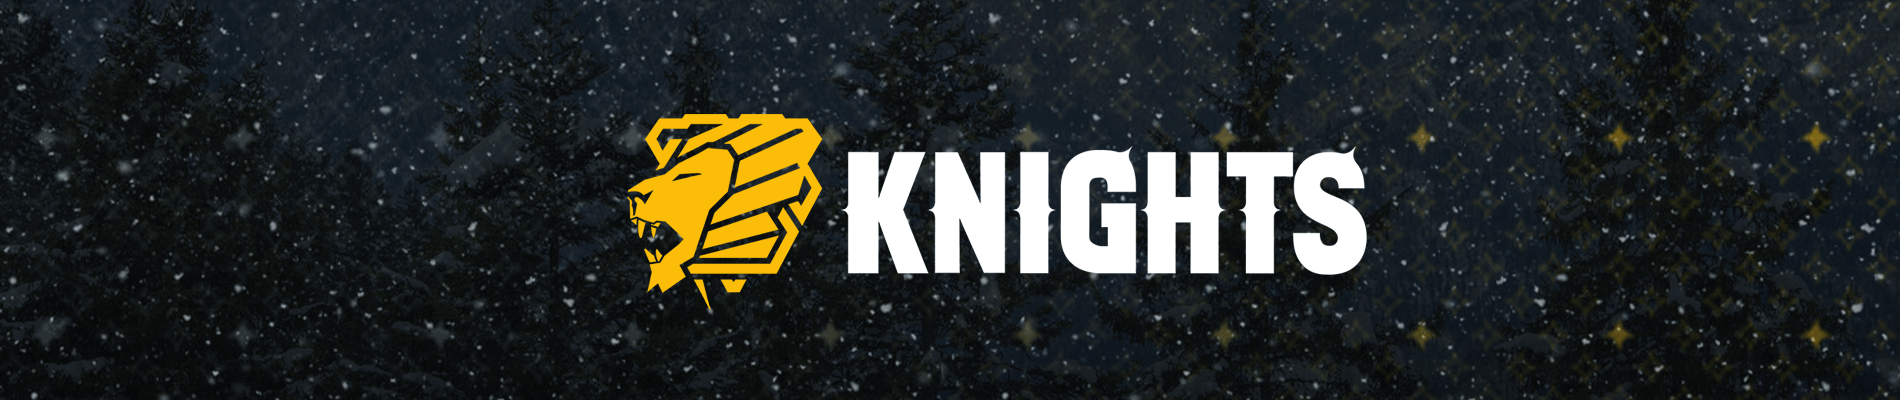 Knights Holiday Banner